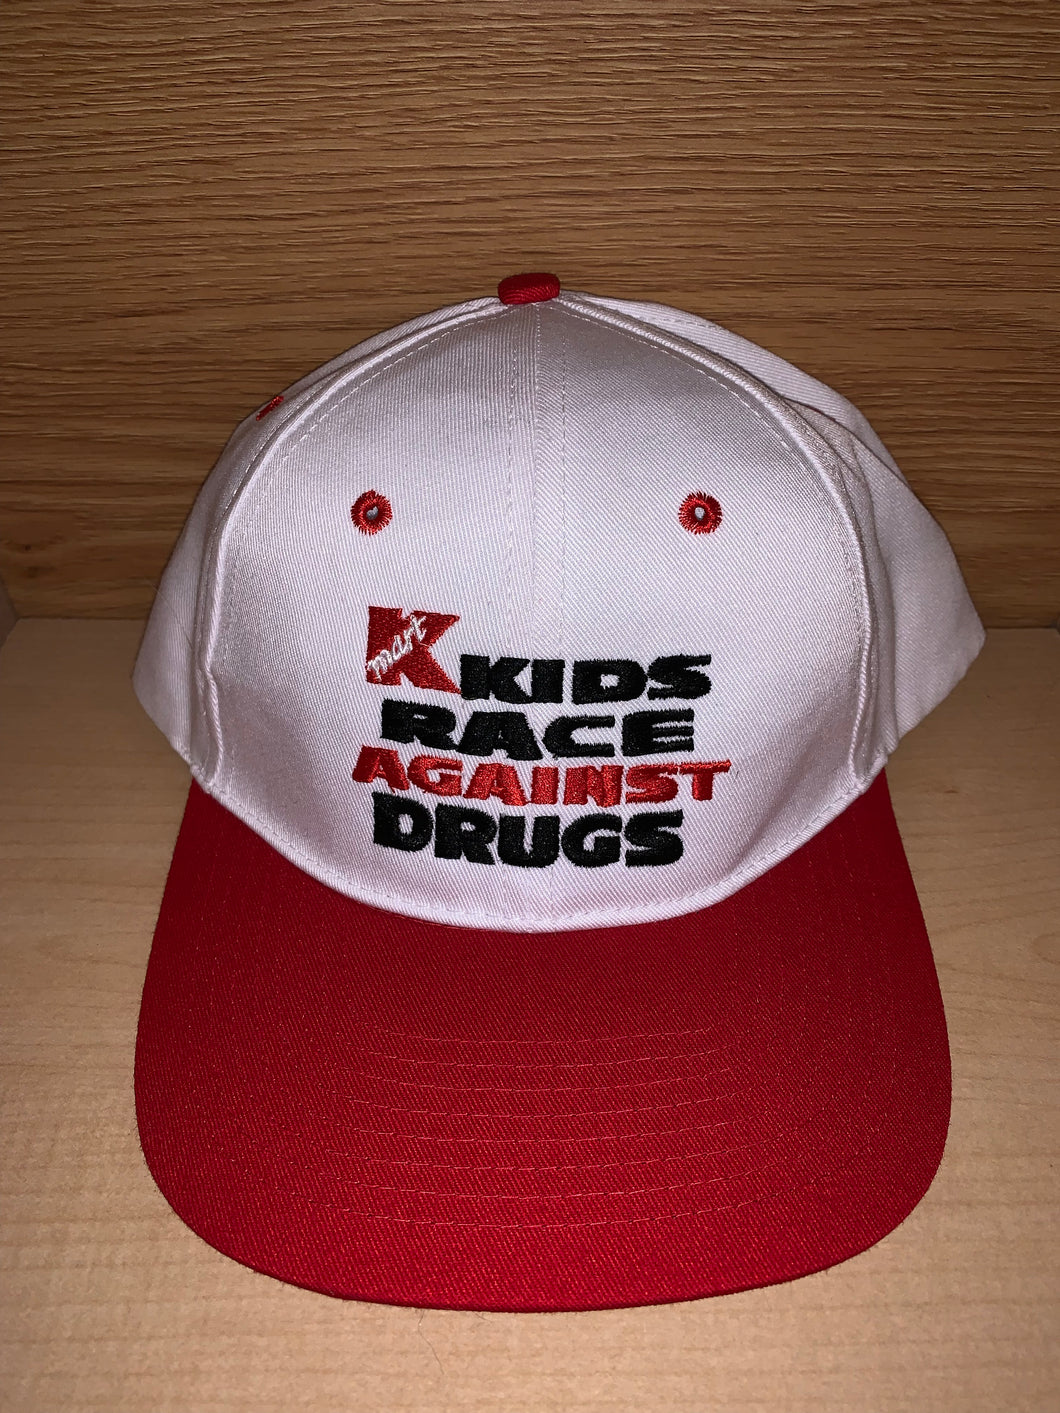 Vintage 1996 Kmart Kids Race Against Drugs Hat